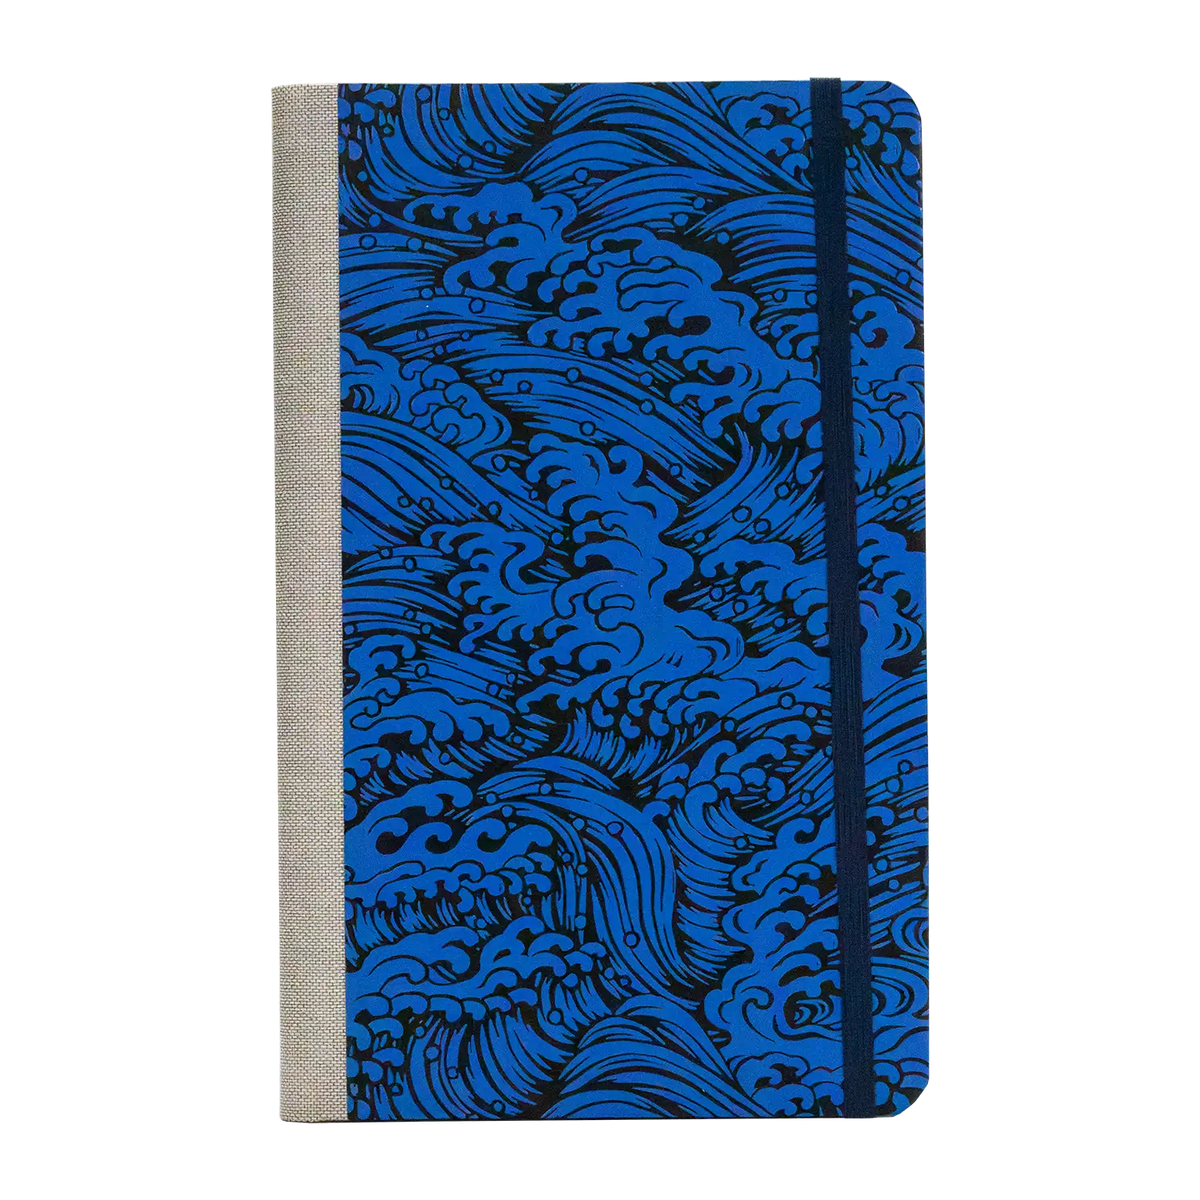 Notizbuch / Skizzenbuch / Bullet Journal / A5 small / dotted / Nami Blue on Blue